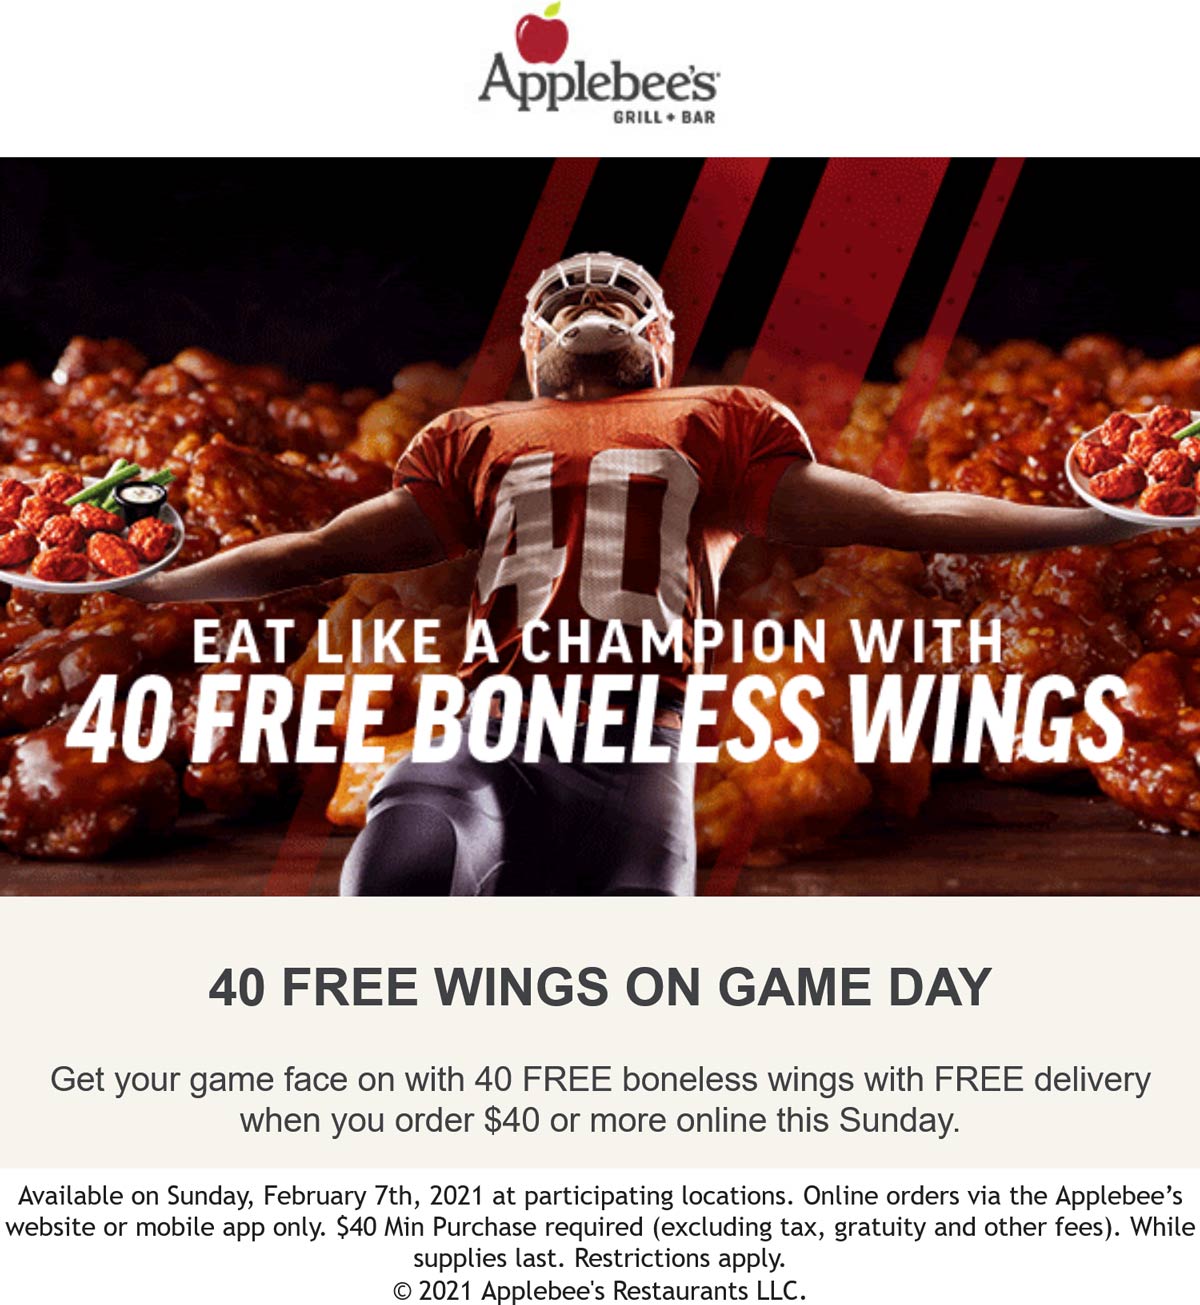 Applebees restaurants Coupon  40 free boneless wings & delivery with $40 spent Sunday at Applebees restaurants #applebees 